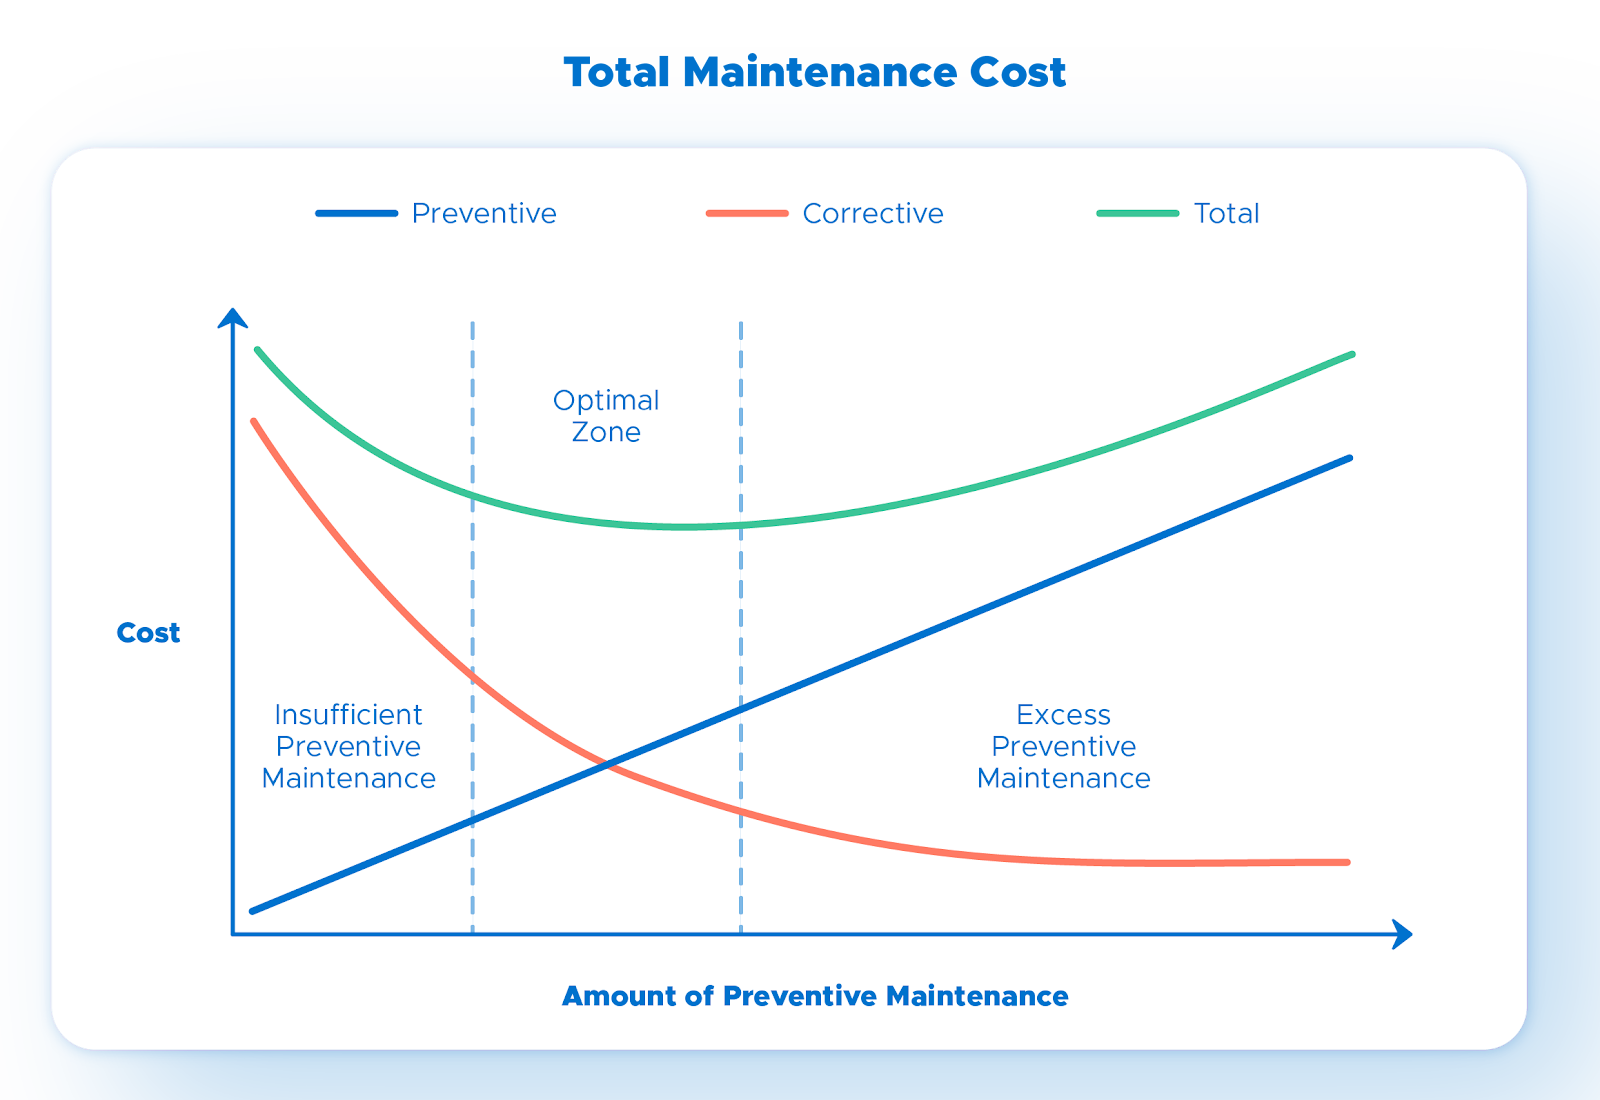 Preventive maintenance costs